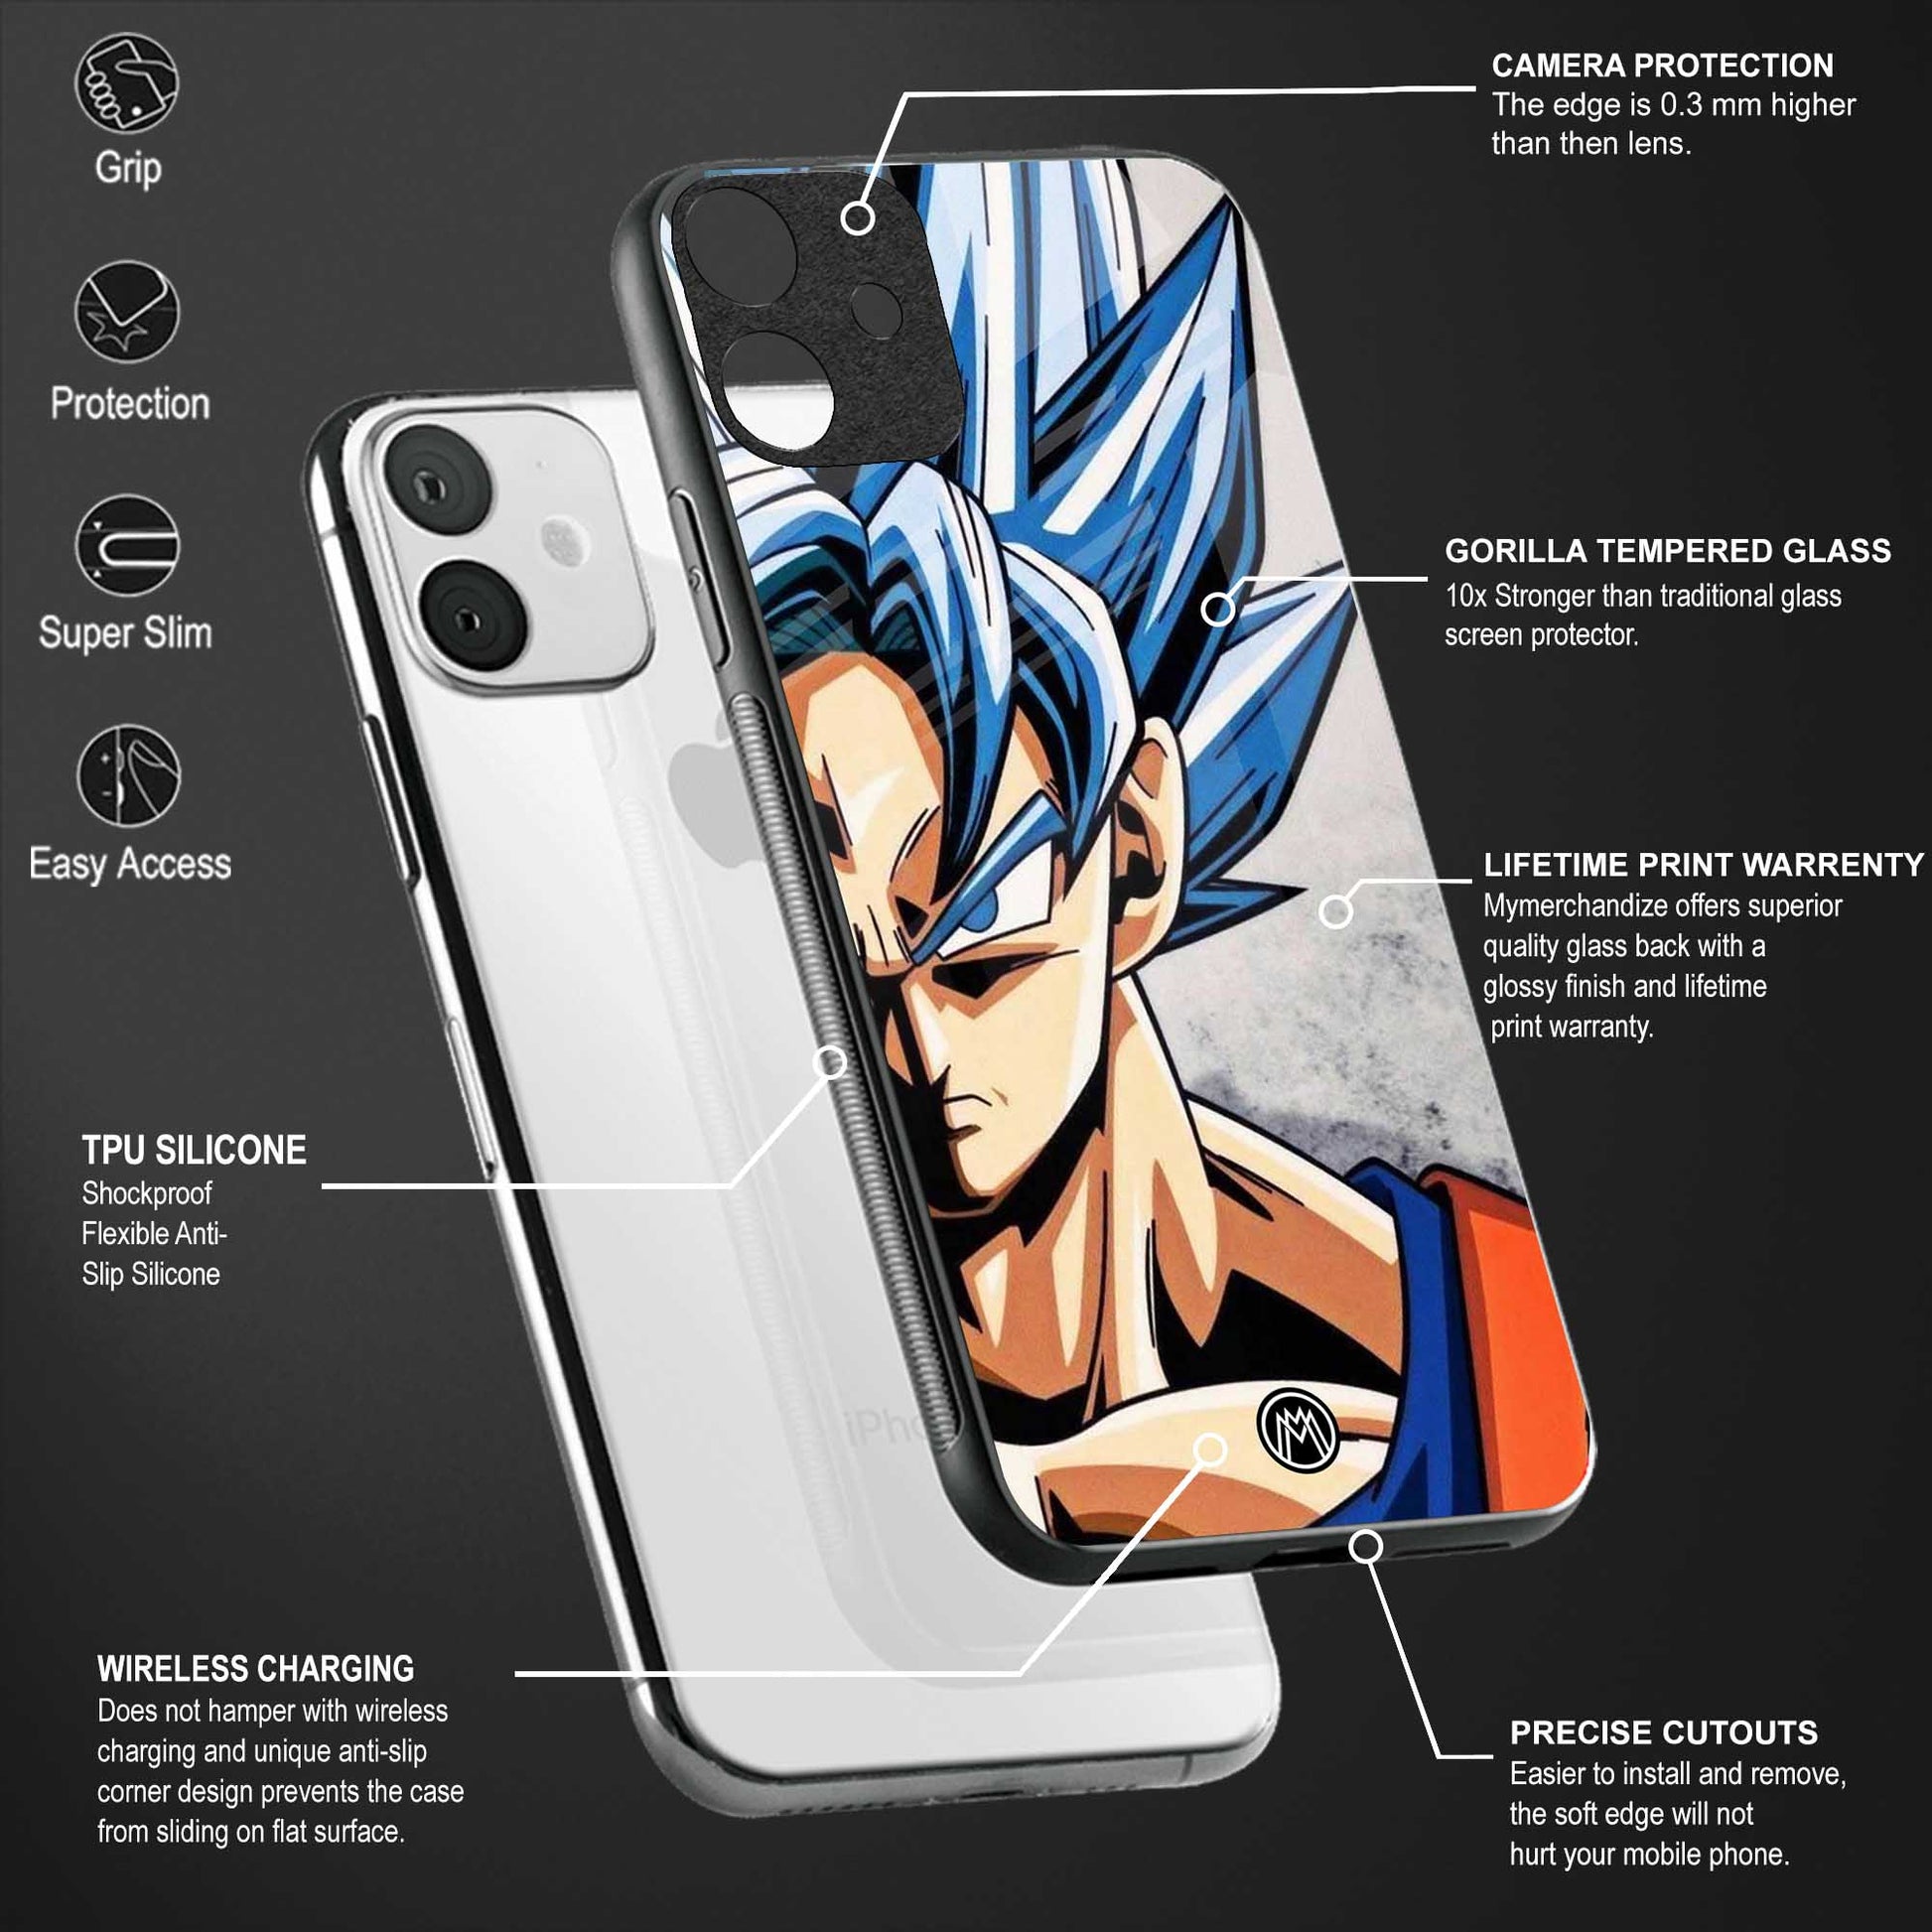 Dragon Ball Z Samsung Galaxy S21 Ultra Case - Dragon Ball Z Super